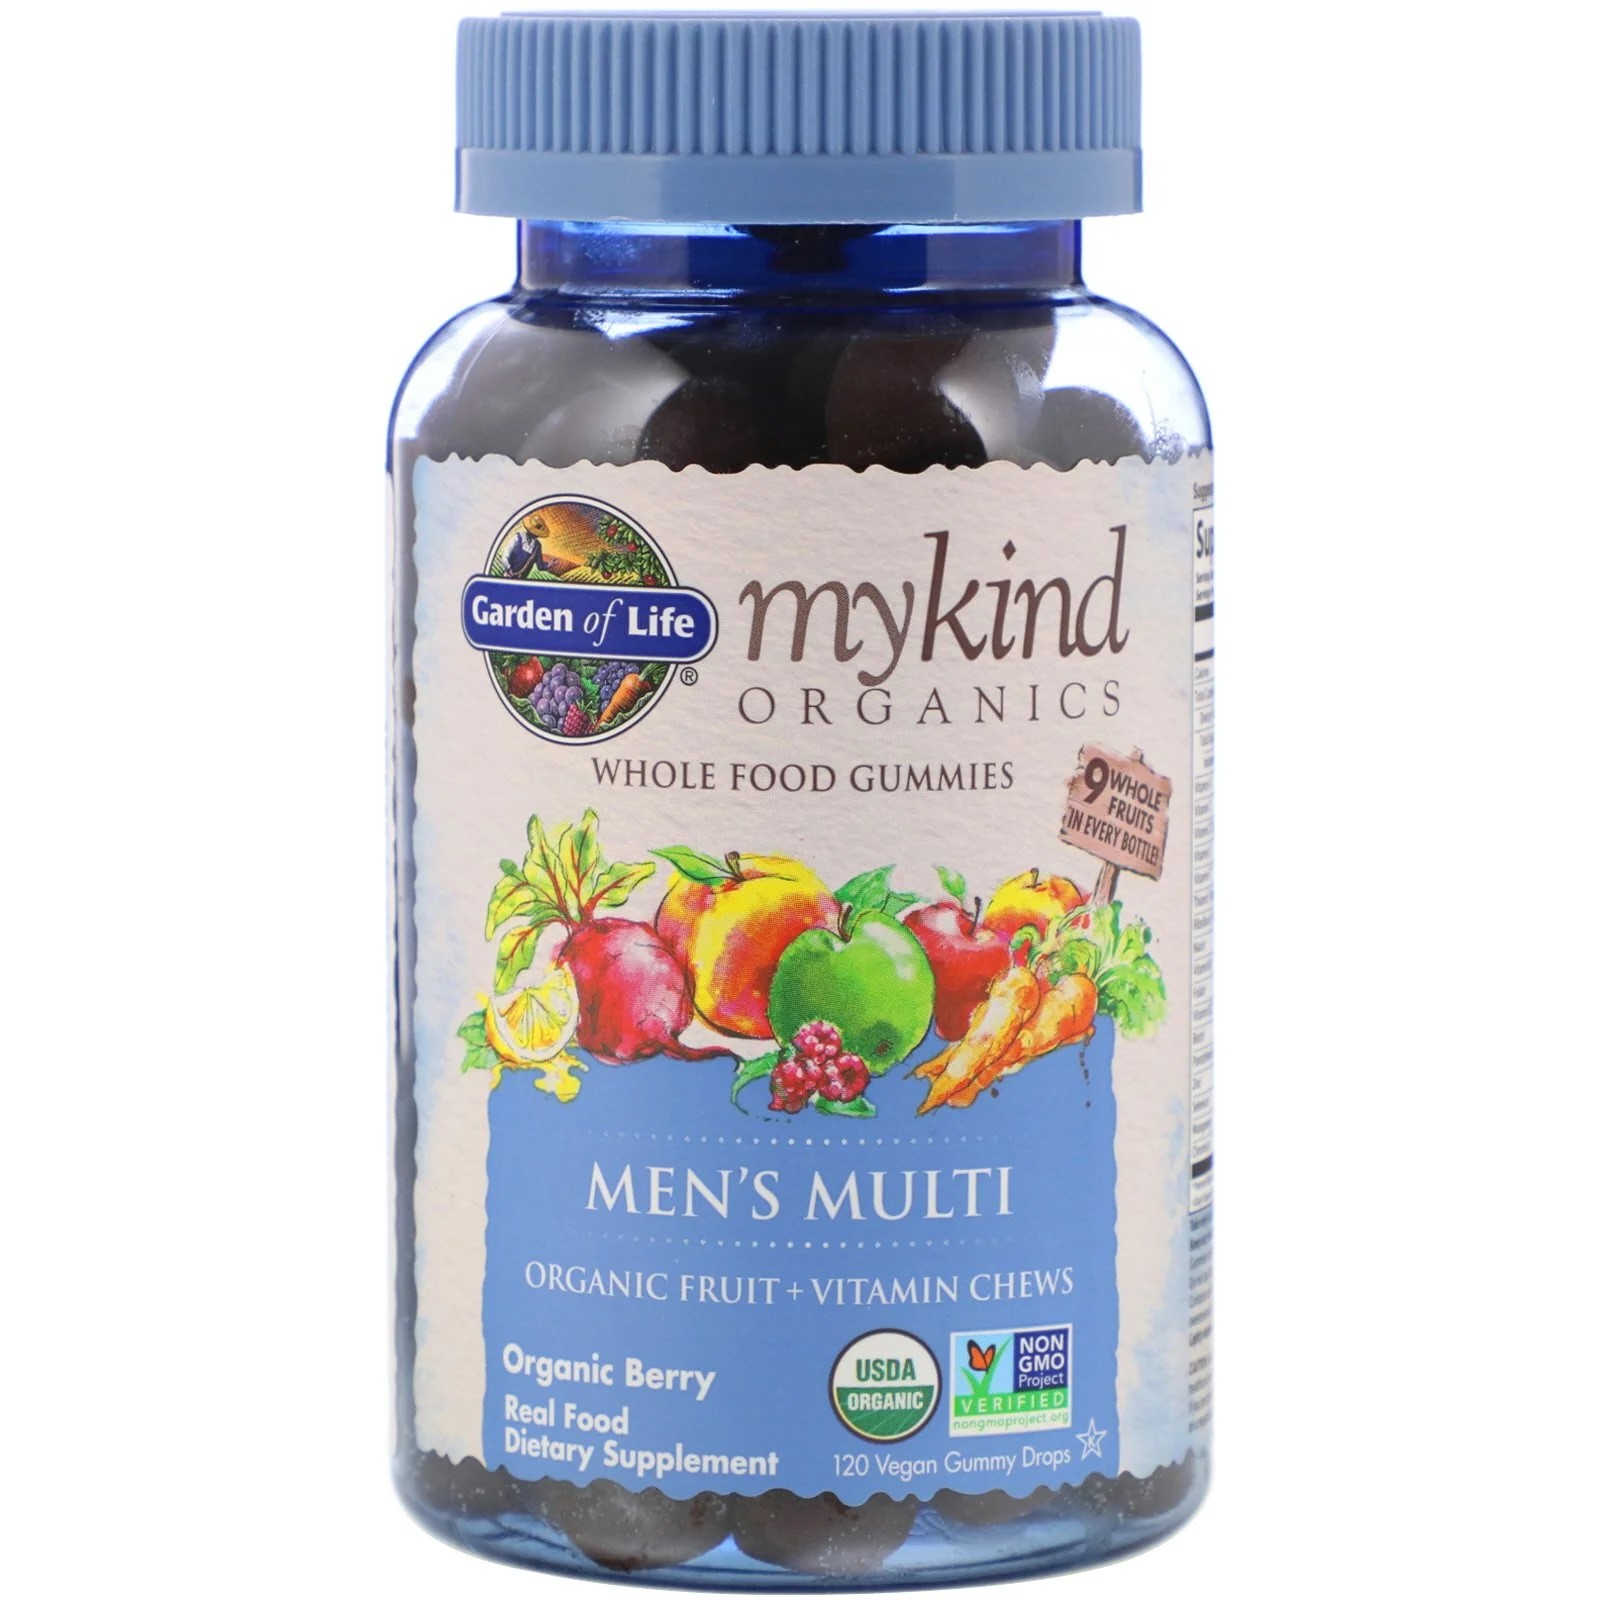 Garden of life Mykind Organics Men's Multi, multivitamín pro muže 40+, 120 gumových bonbónů